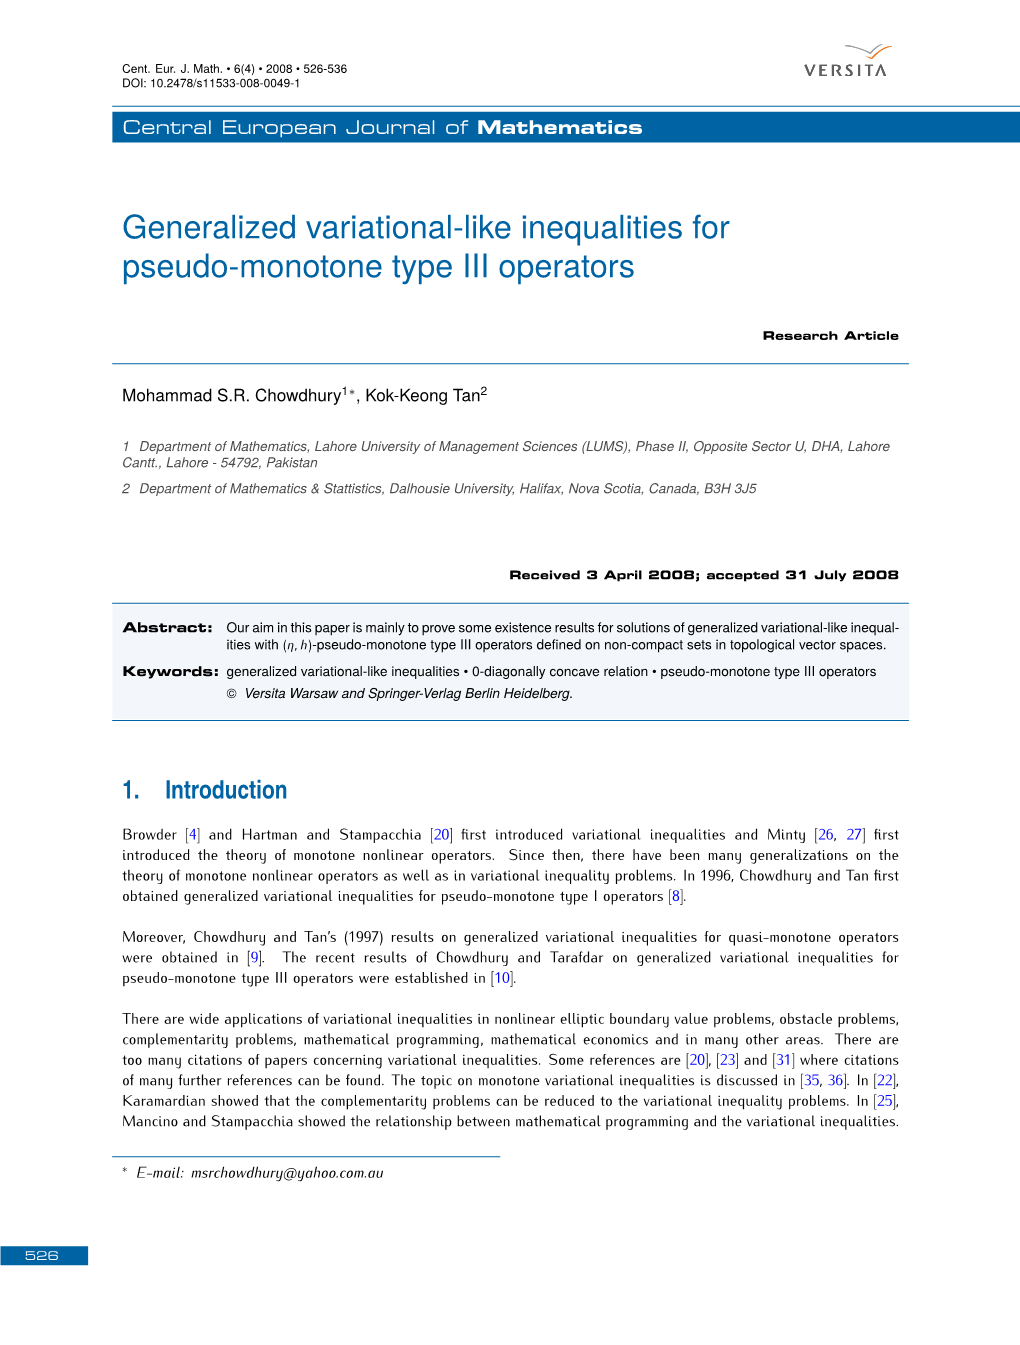 Generalized Variational-Like Inequalities for Pseudo-Monotone Type III Operators